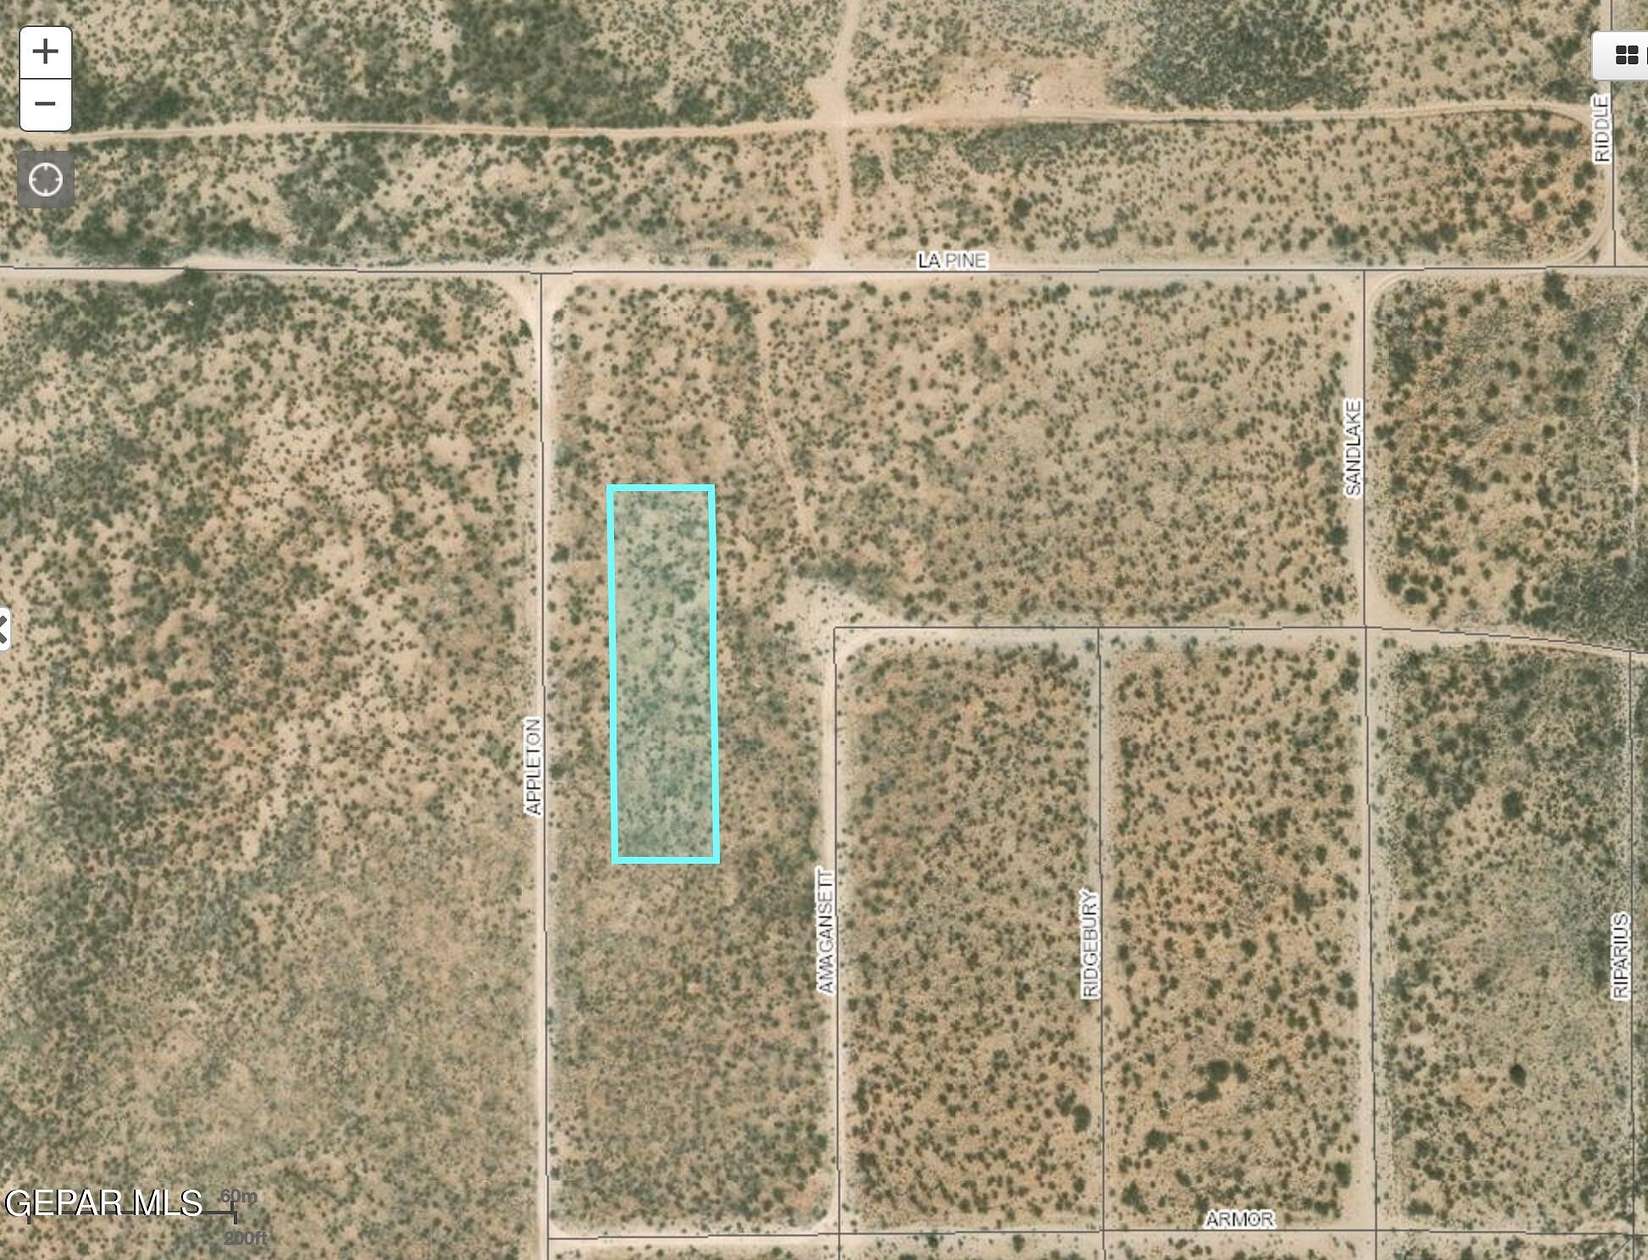 0.84 Acres of Land for Sale in El Paso, Texas